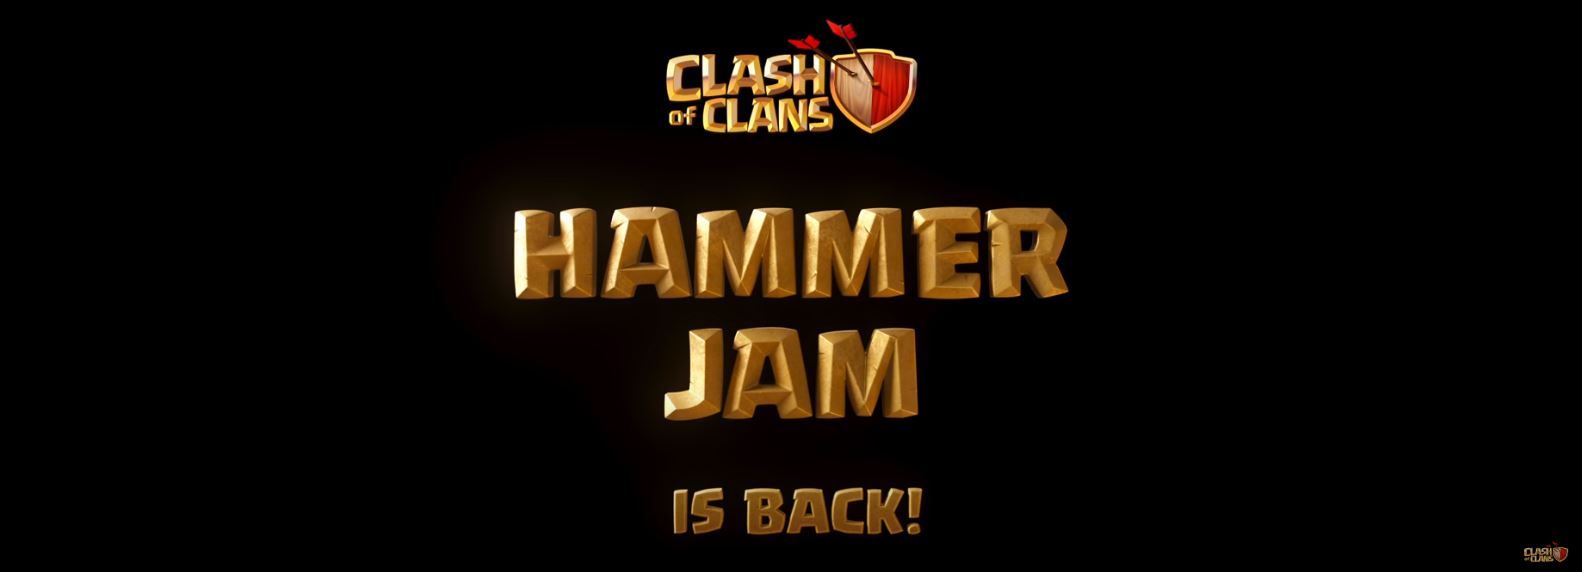 Clash of Clans Update Hammer Jam 2021